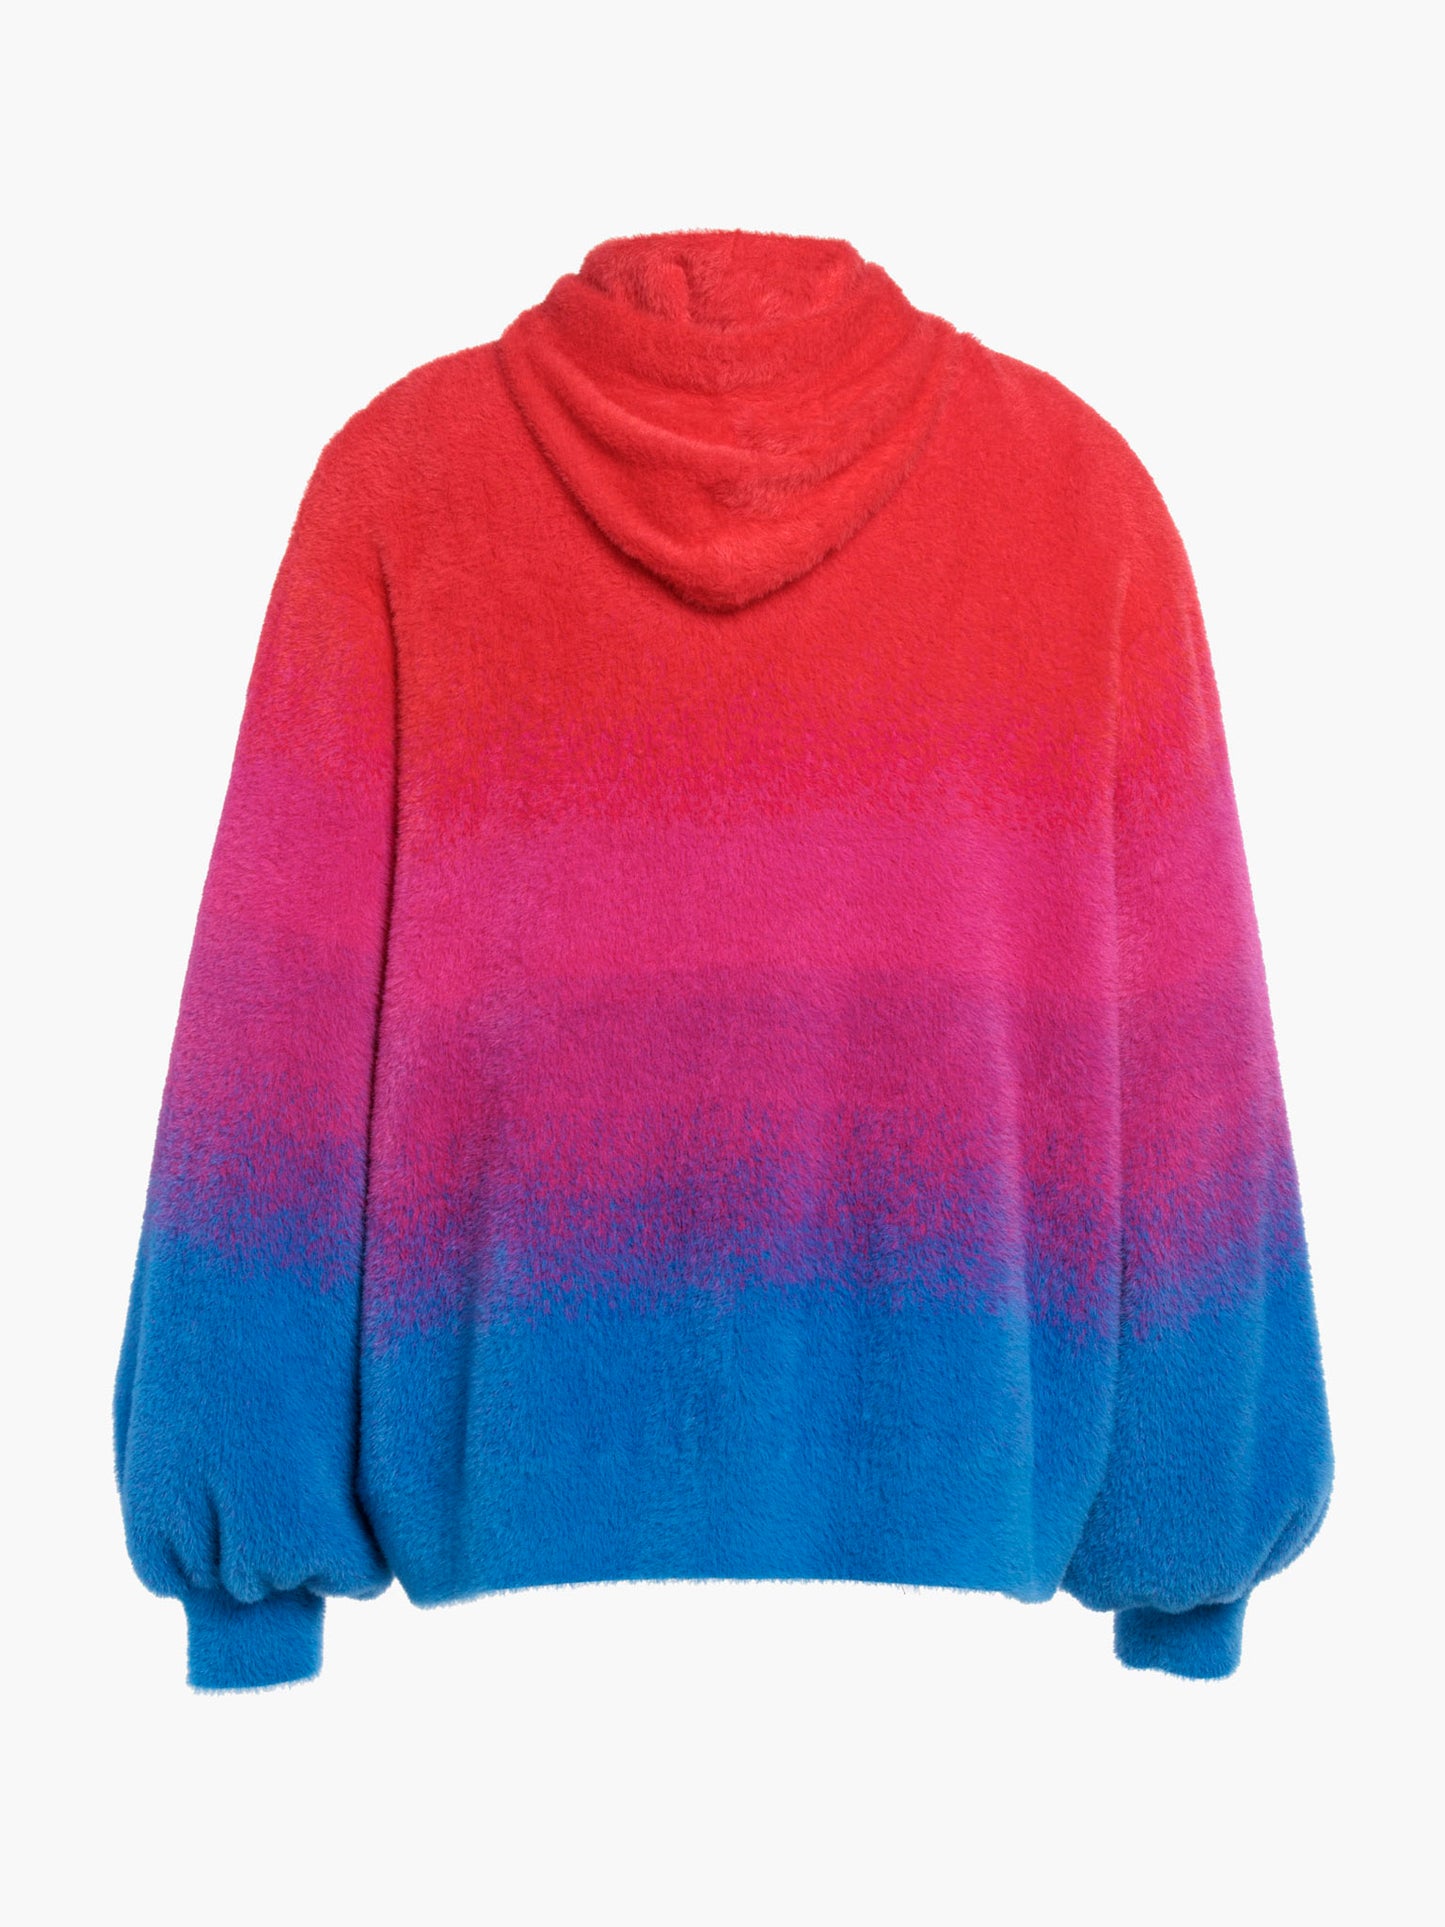 DESIRE hooded knit sweater